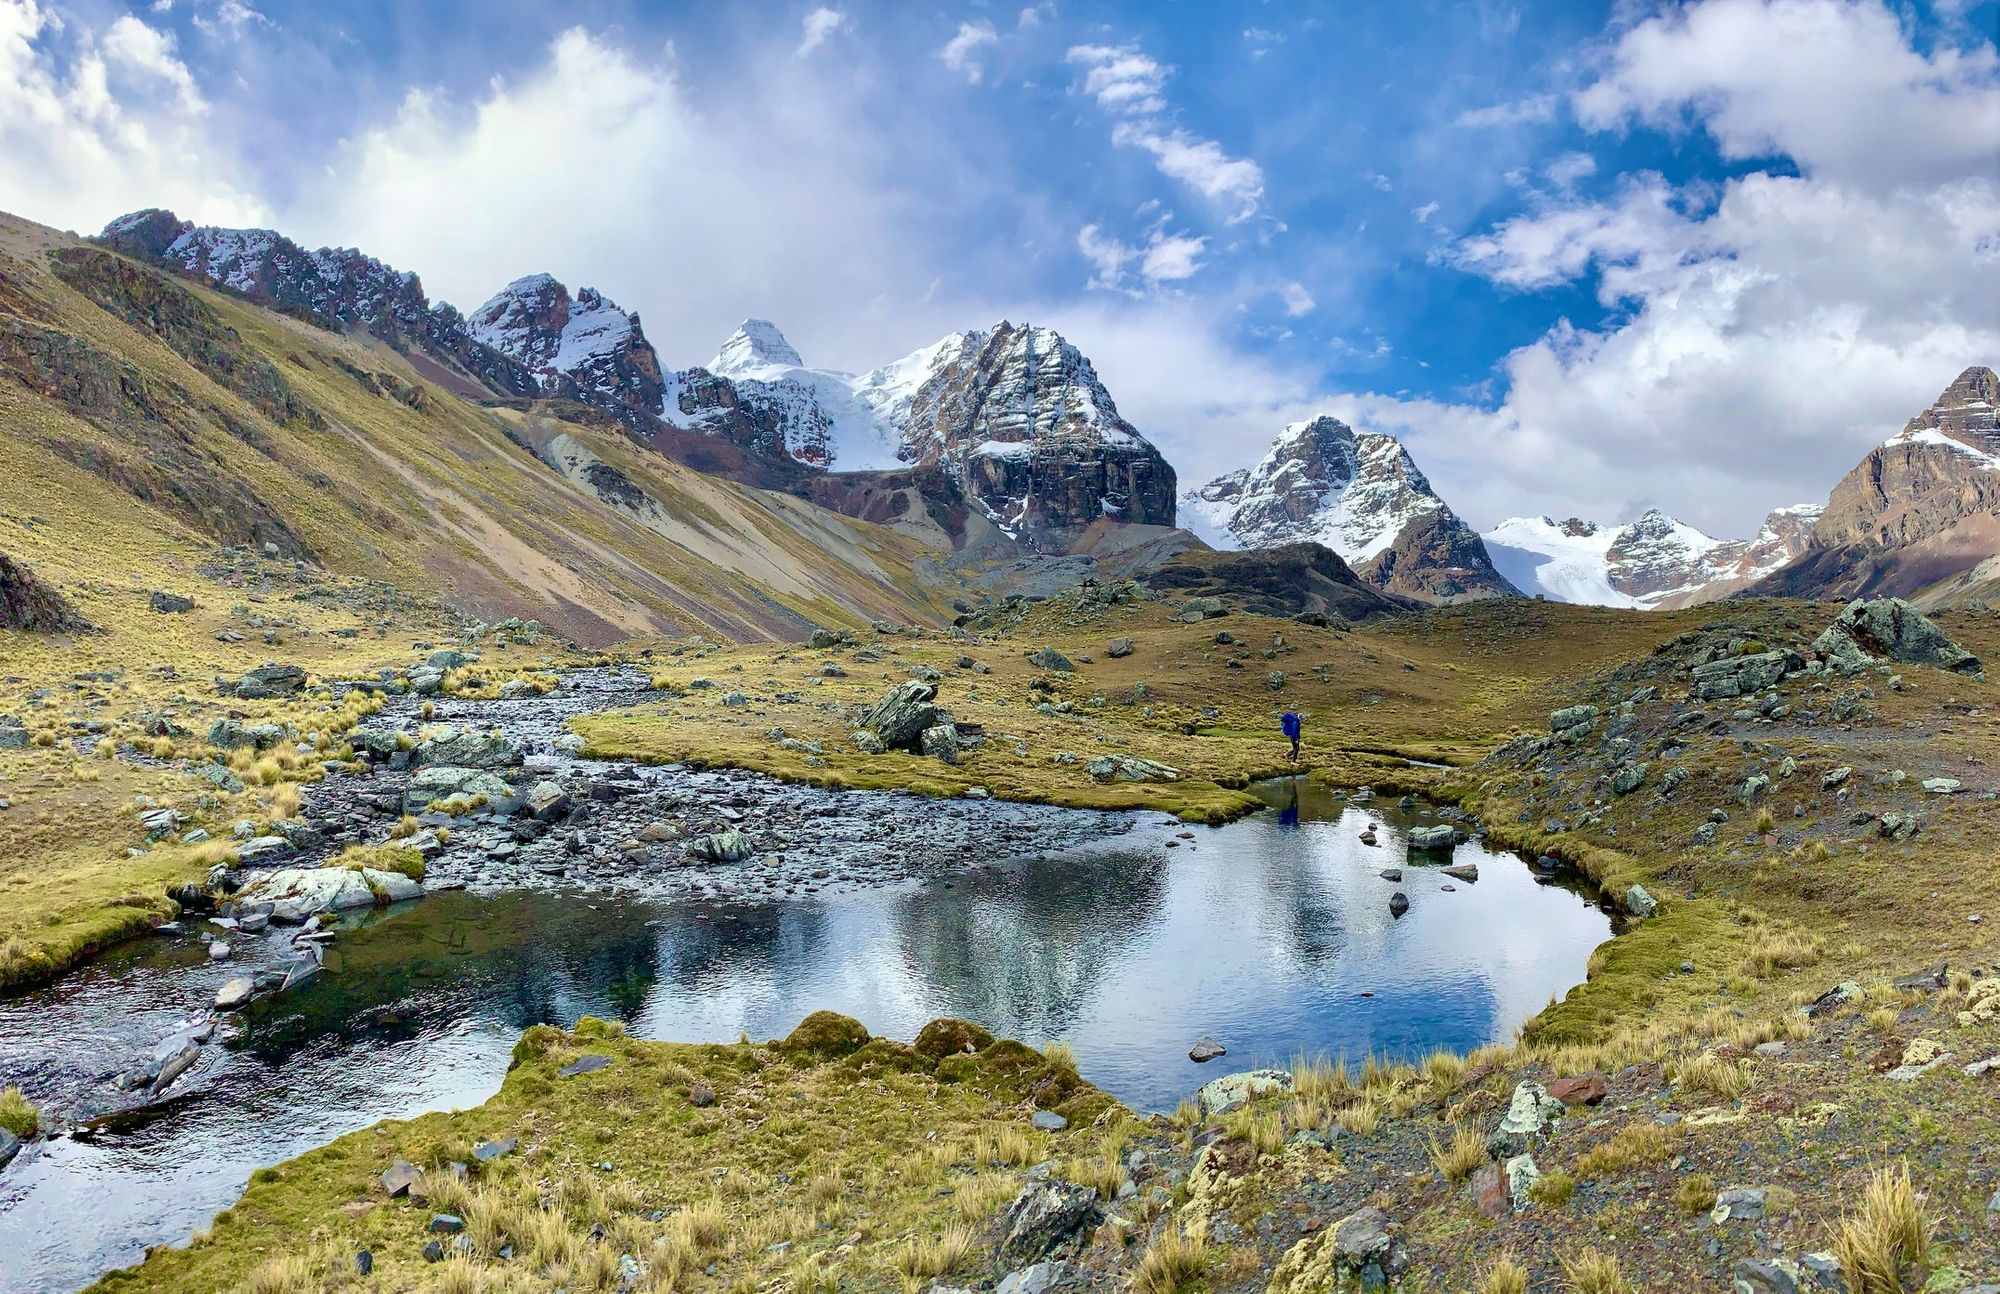 A glacial lake and mountains in Bolivia's Cordillera Real